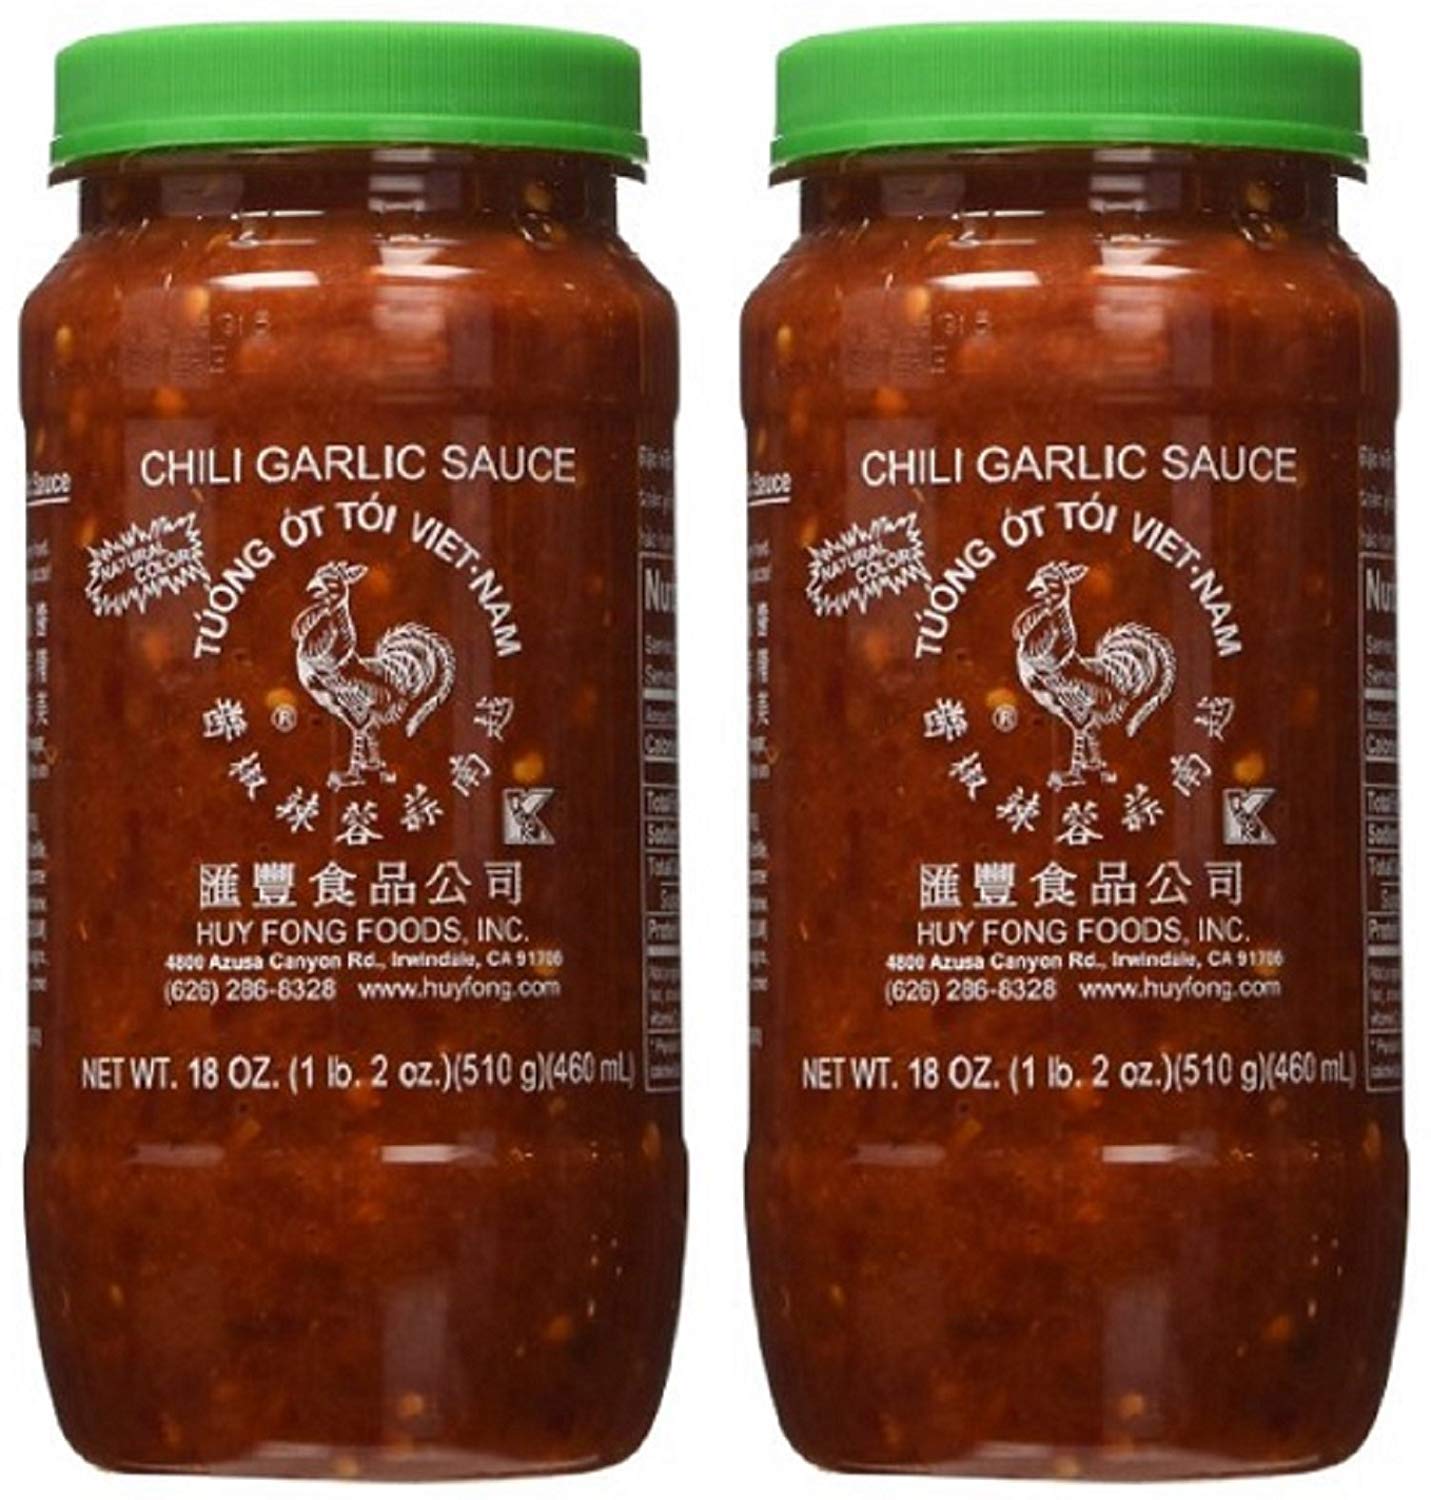 Huy Fong Fresh Chili Garlic Sauce garlic